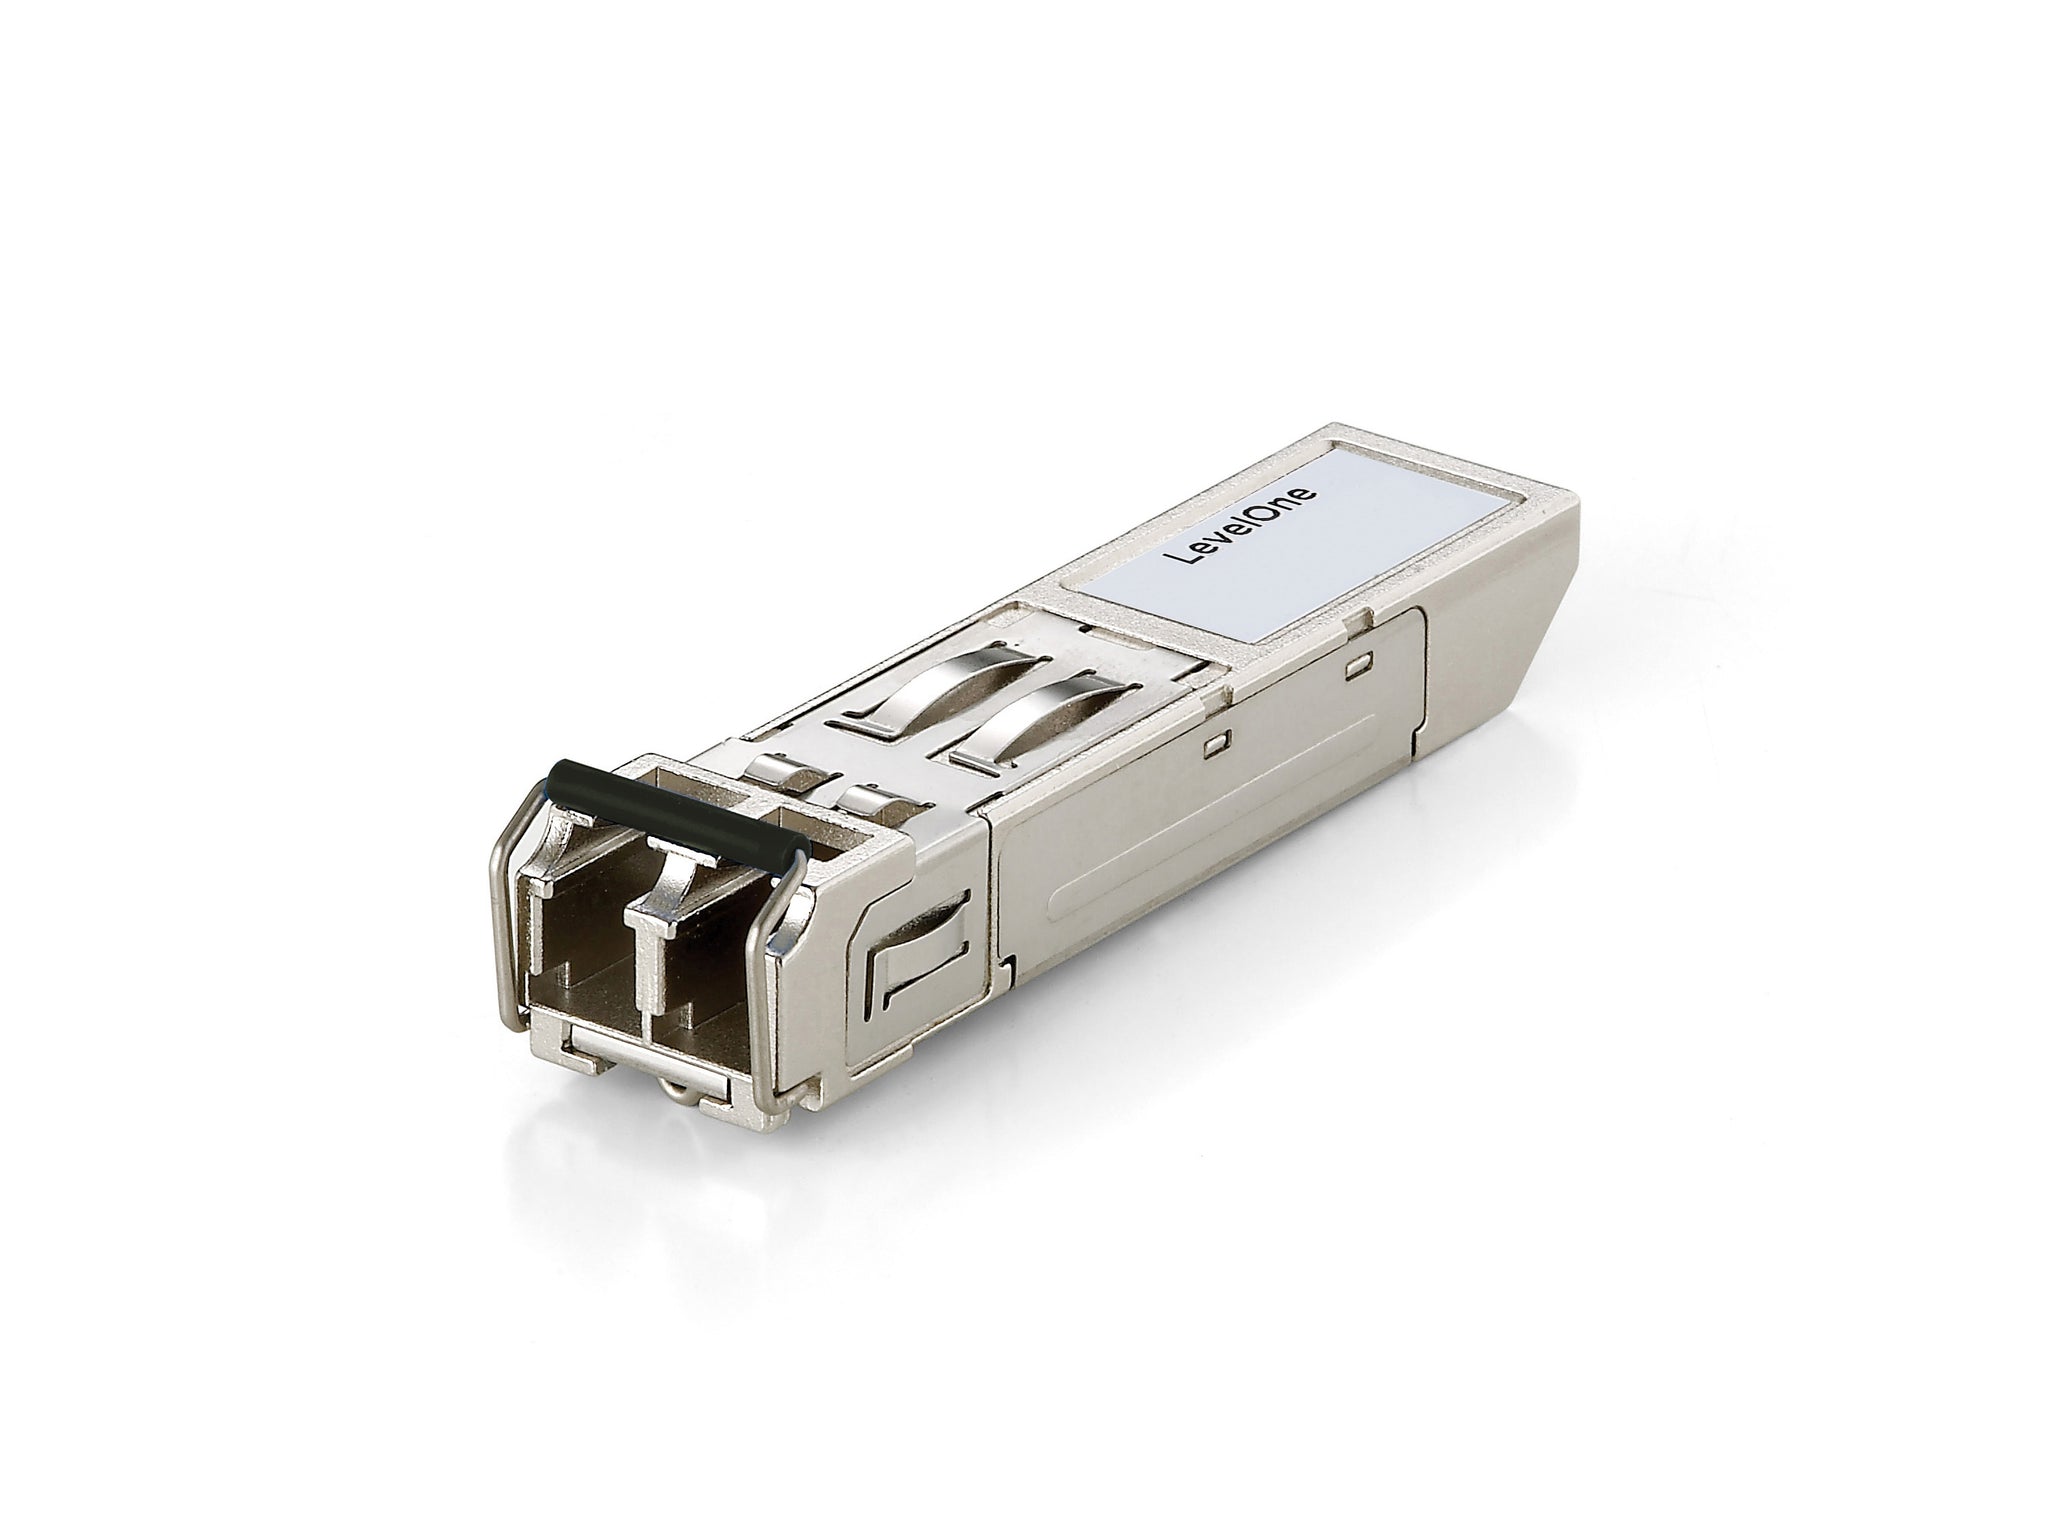 SFP-4200 1.25Gbps Multi-mode Industrial SFP Transceiver, 550m, 850nm, -20?øC to 85?øC